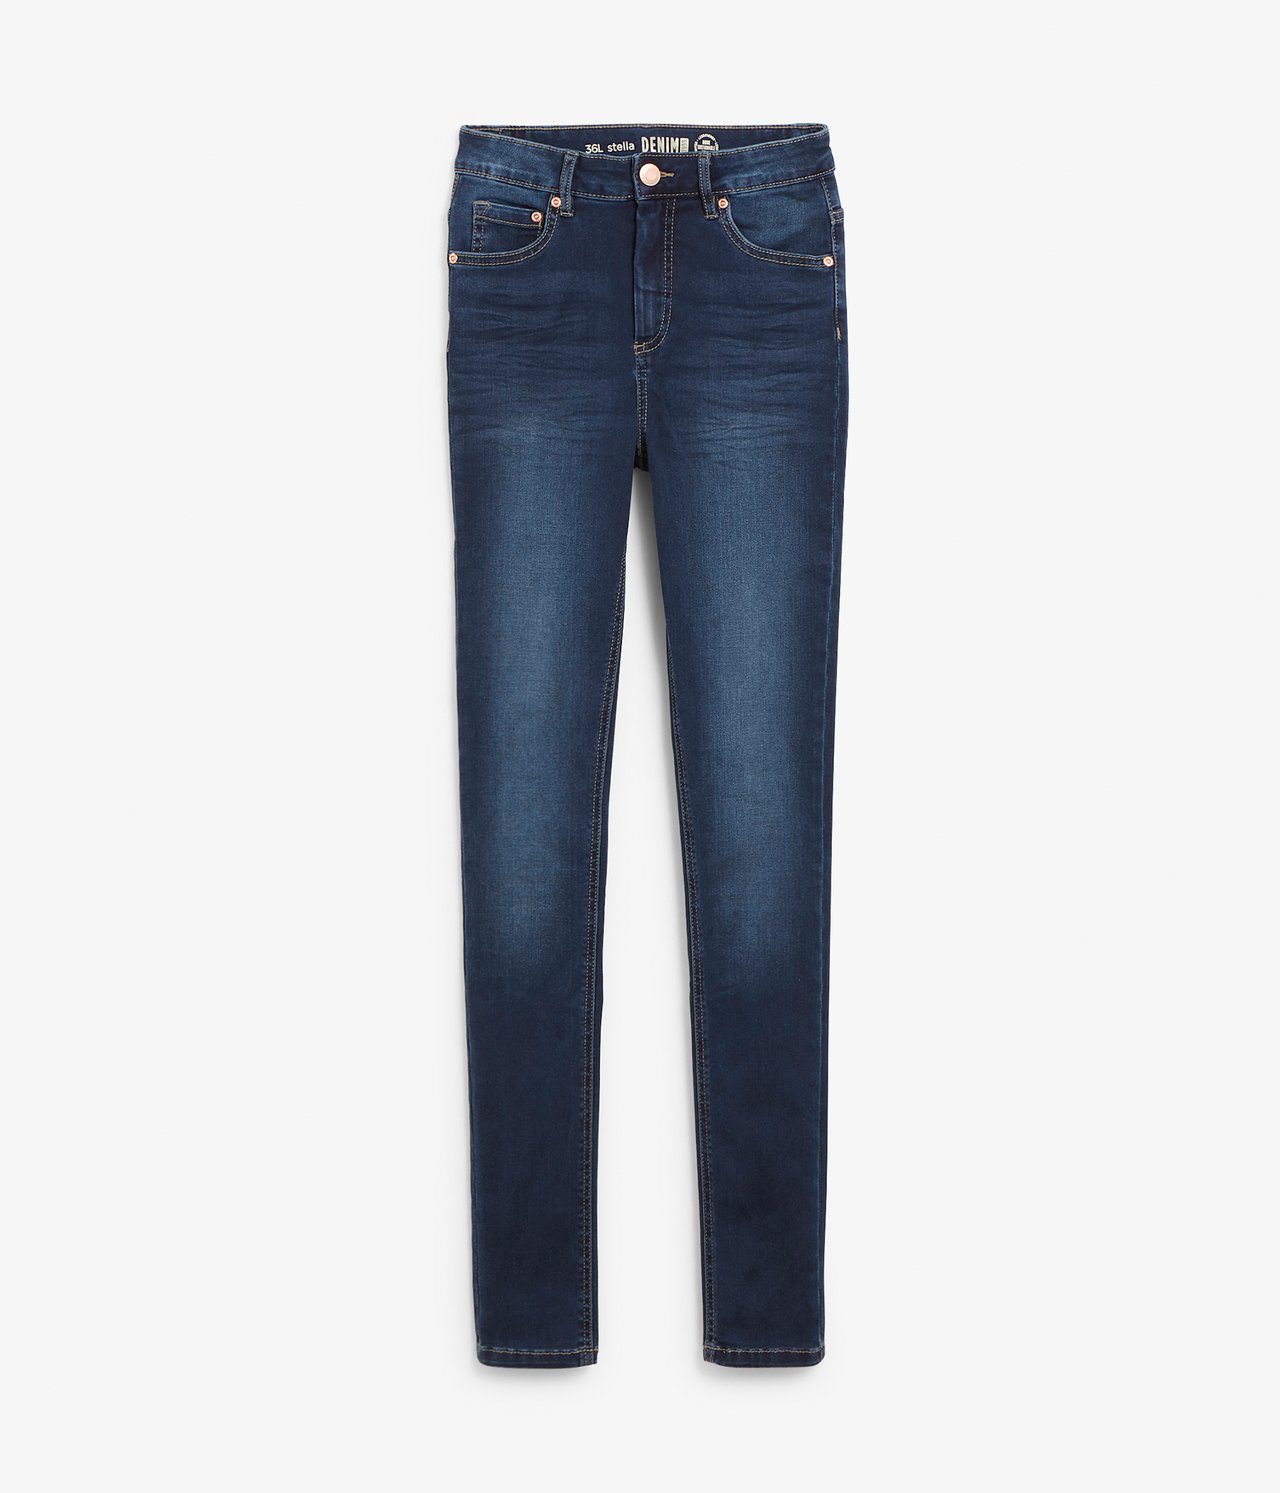 Super slim jeans extra long leg Mörk denim - null - 1